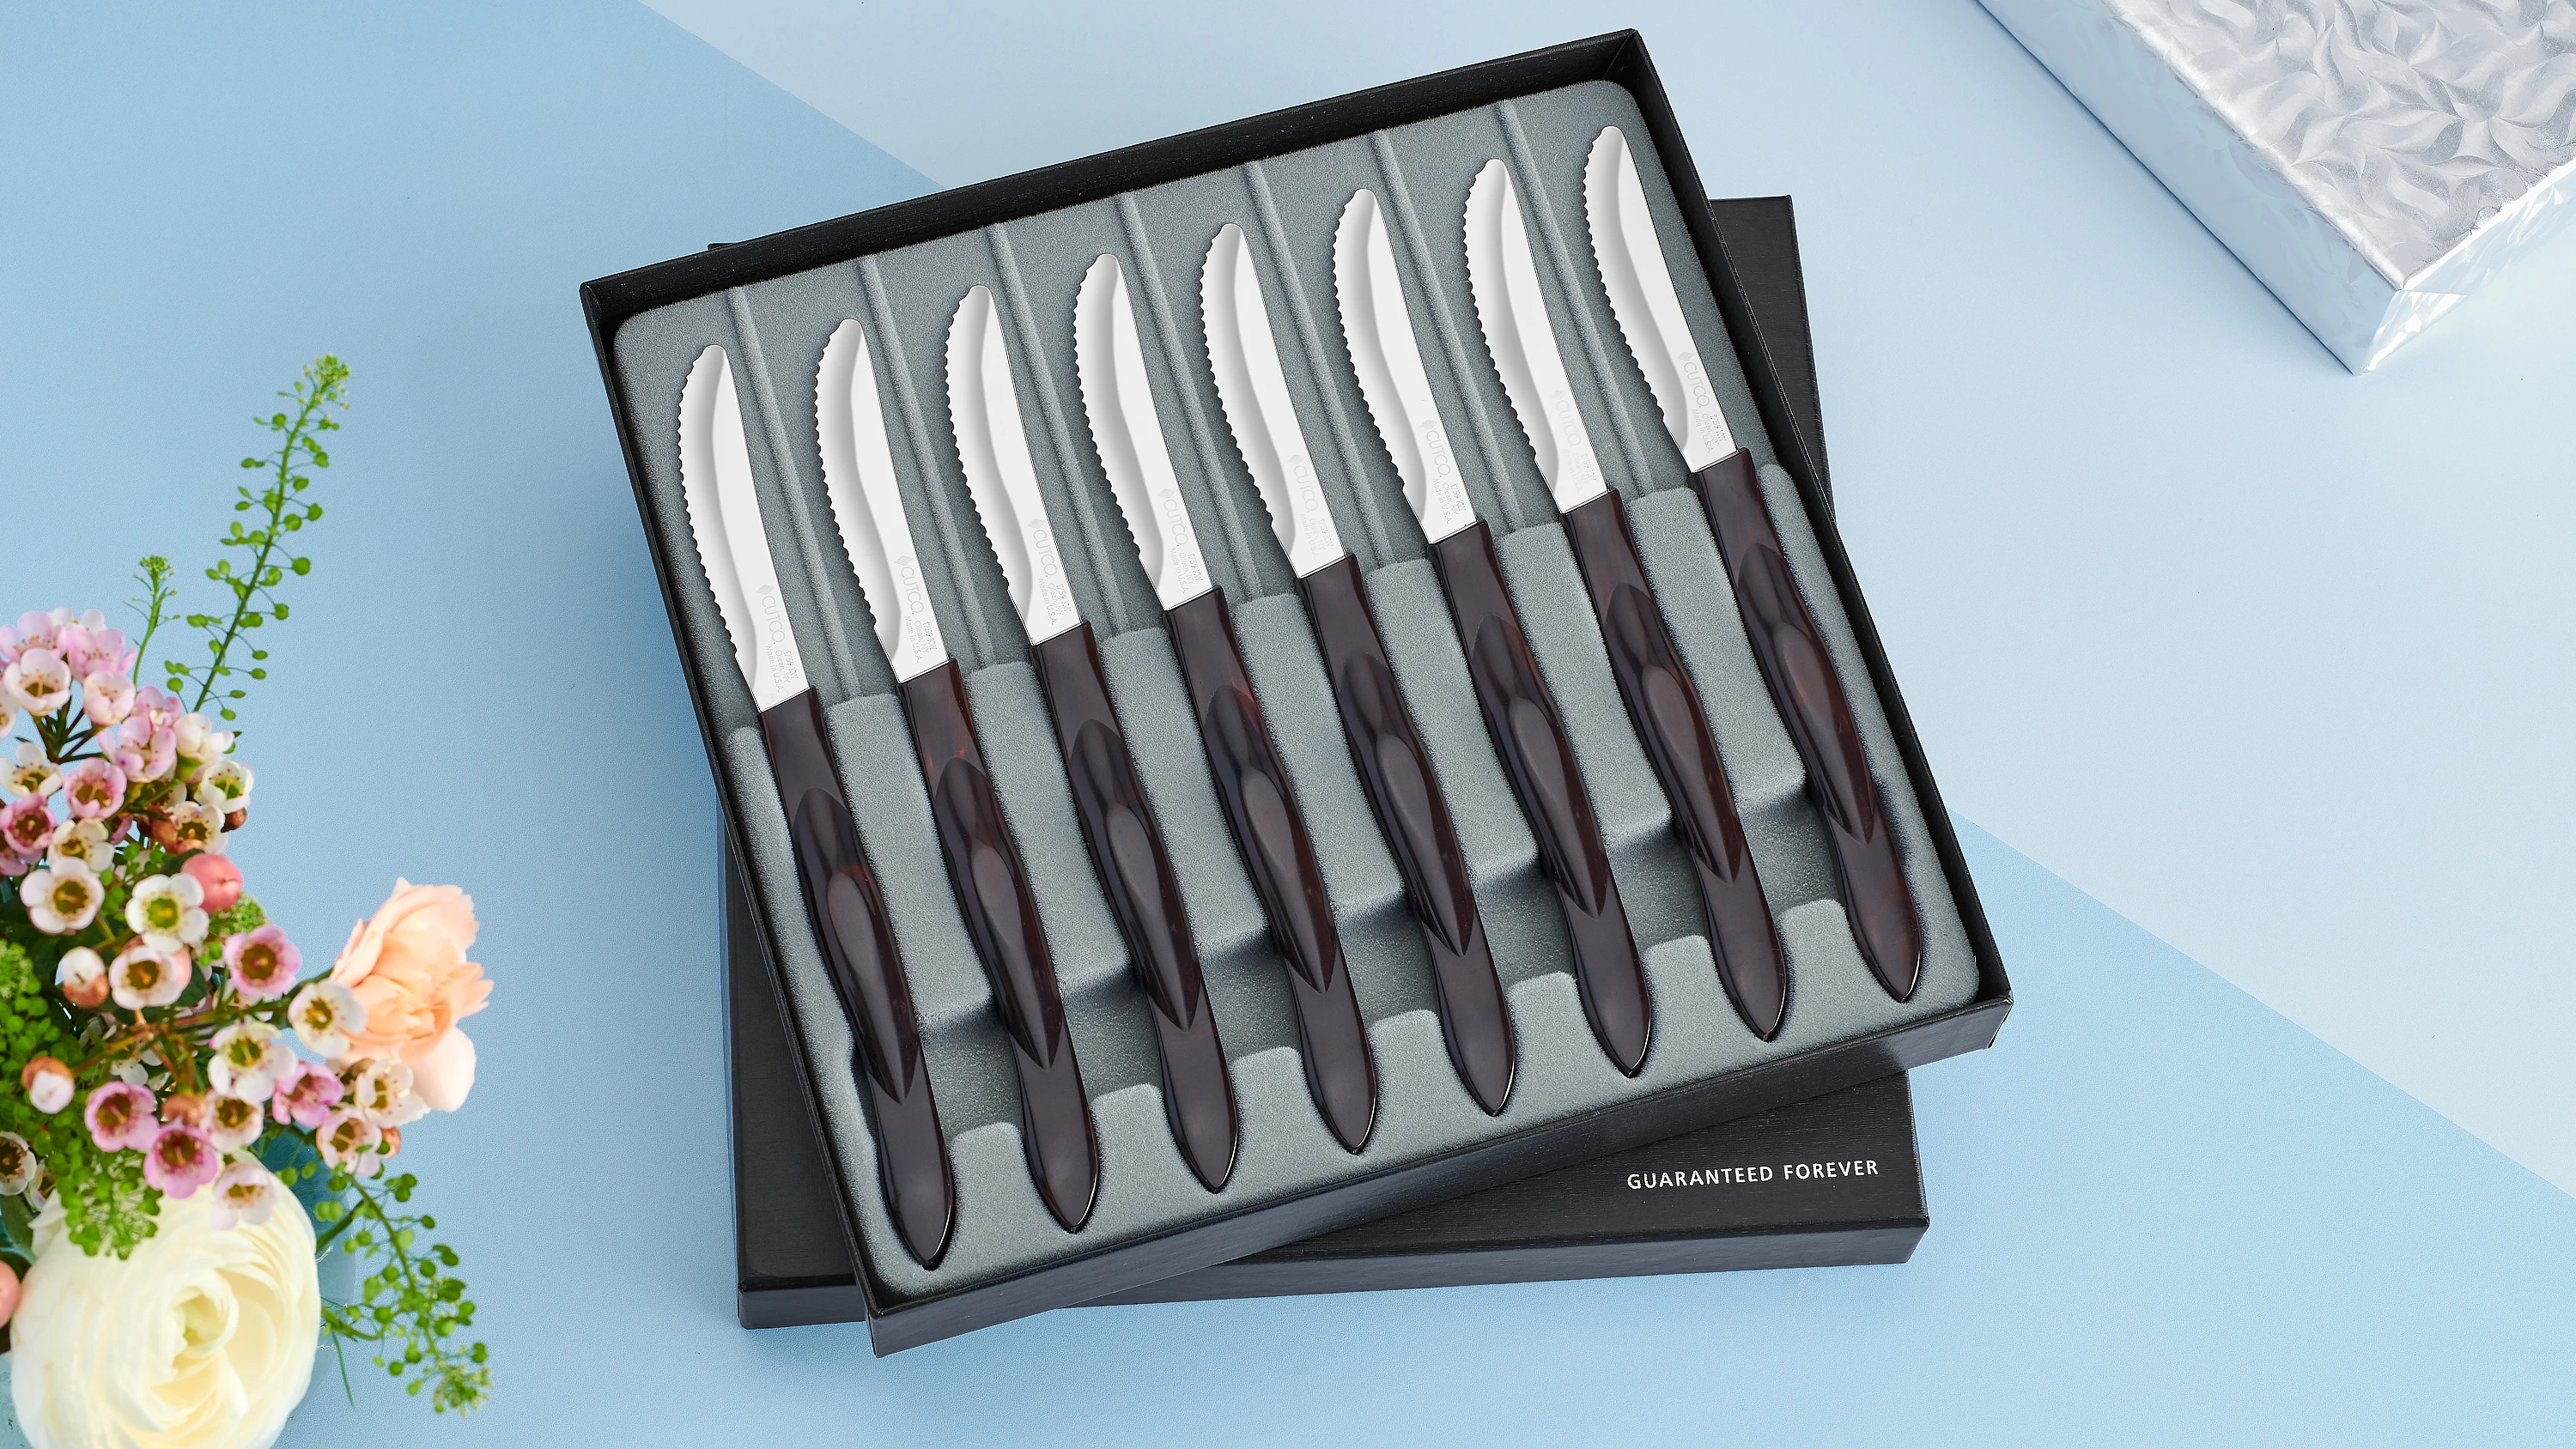 8 Cutco Steak Knives 